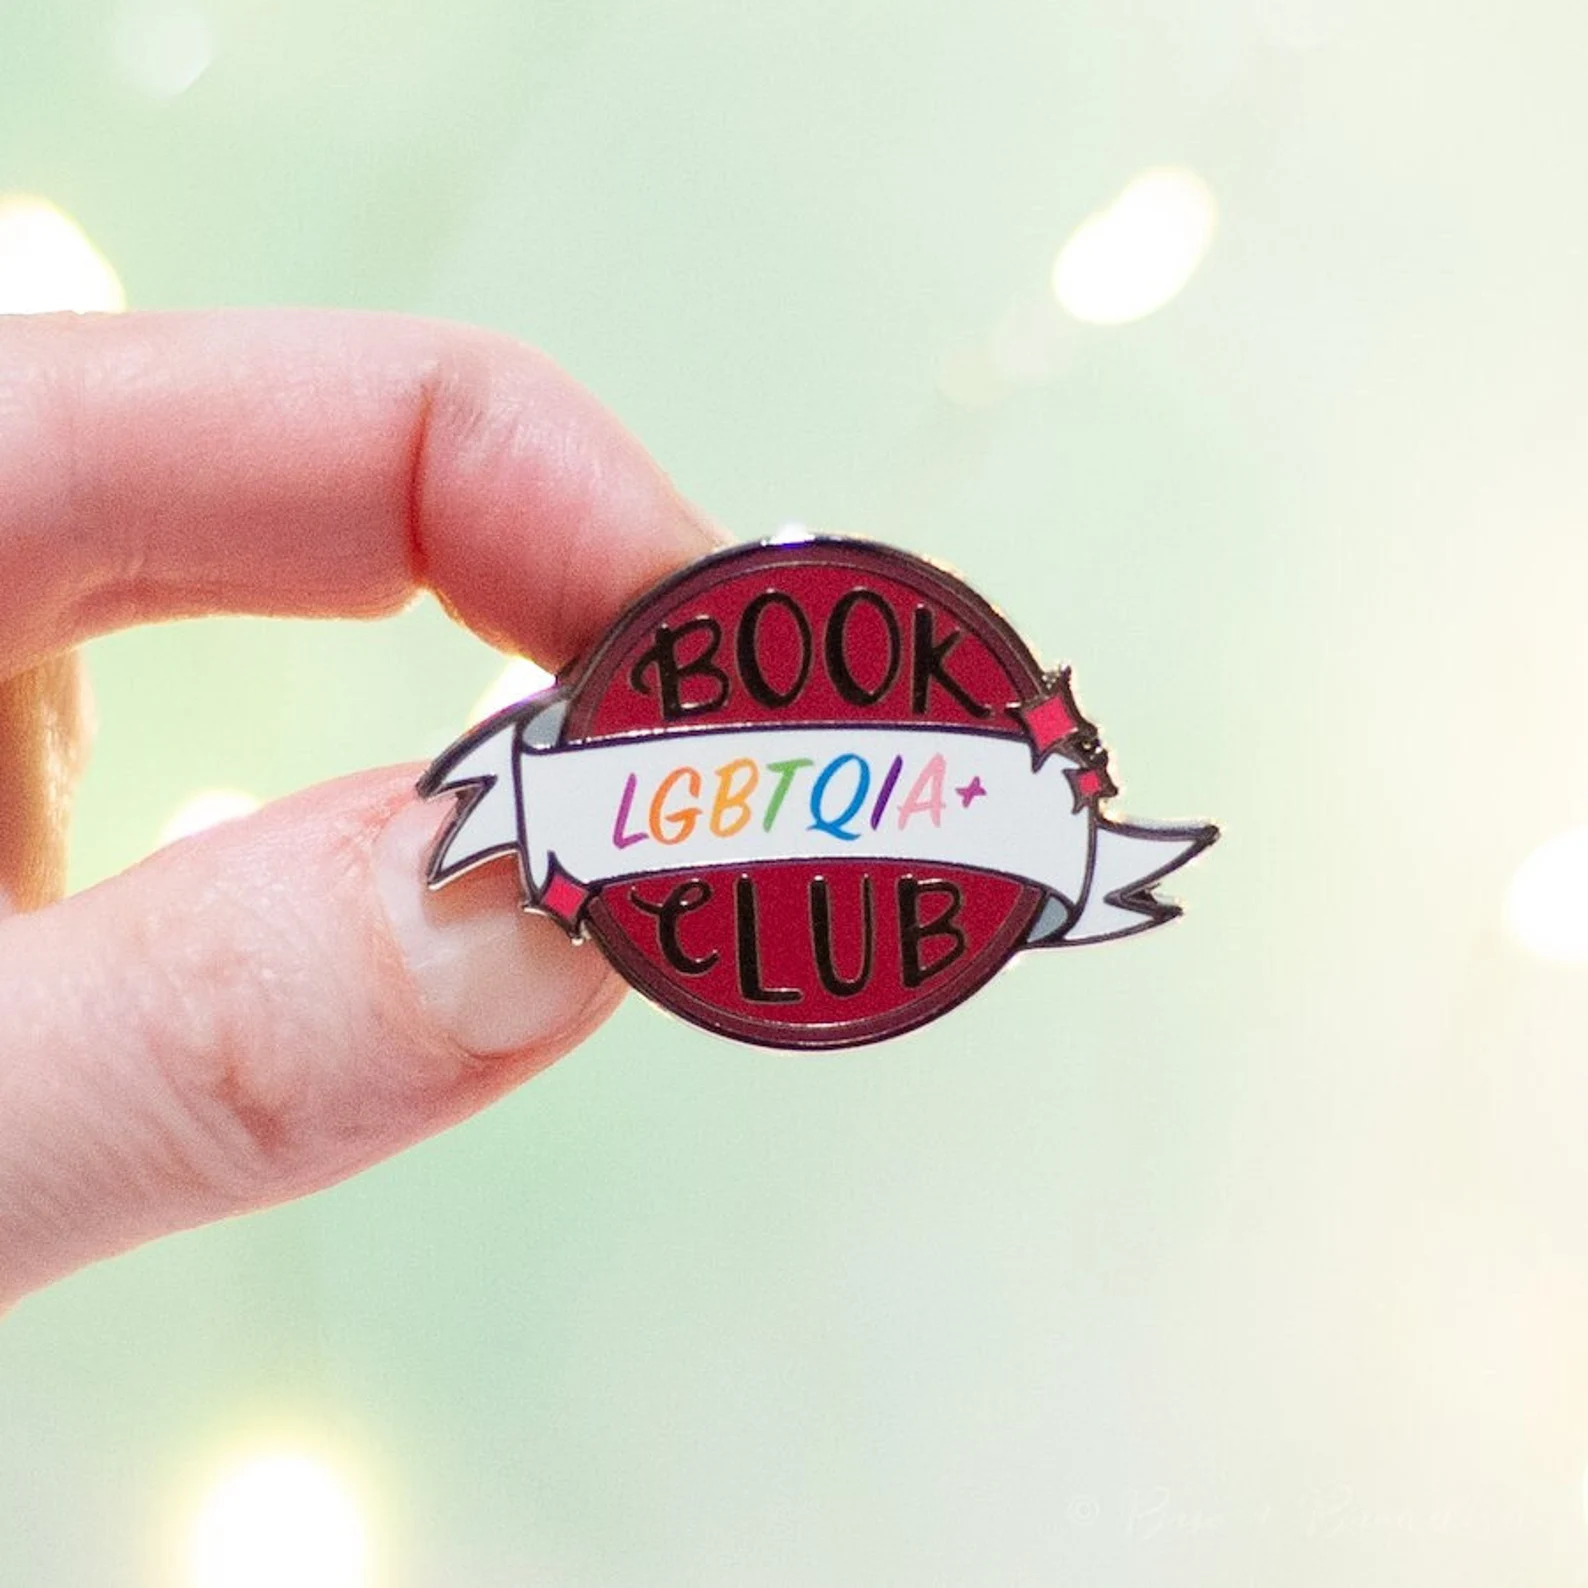 Image of a circle enamel pin that says "LGBTQIA+ Book Club."